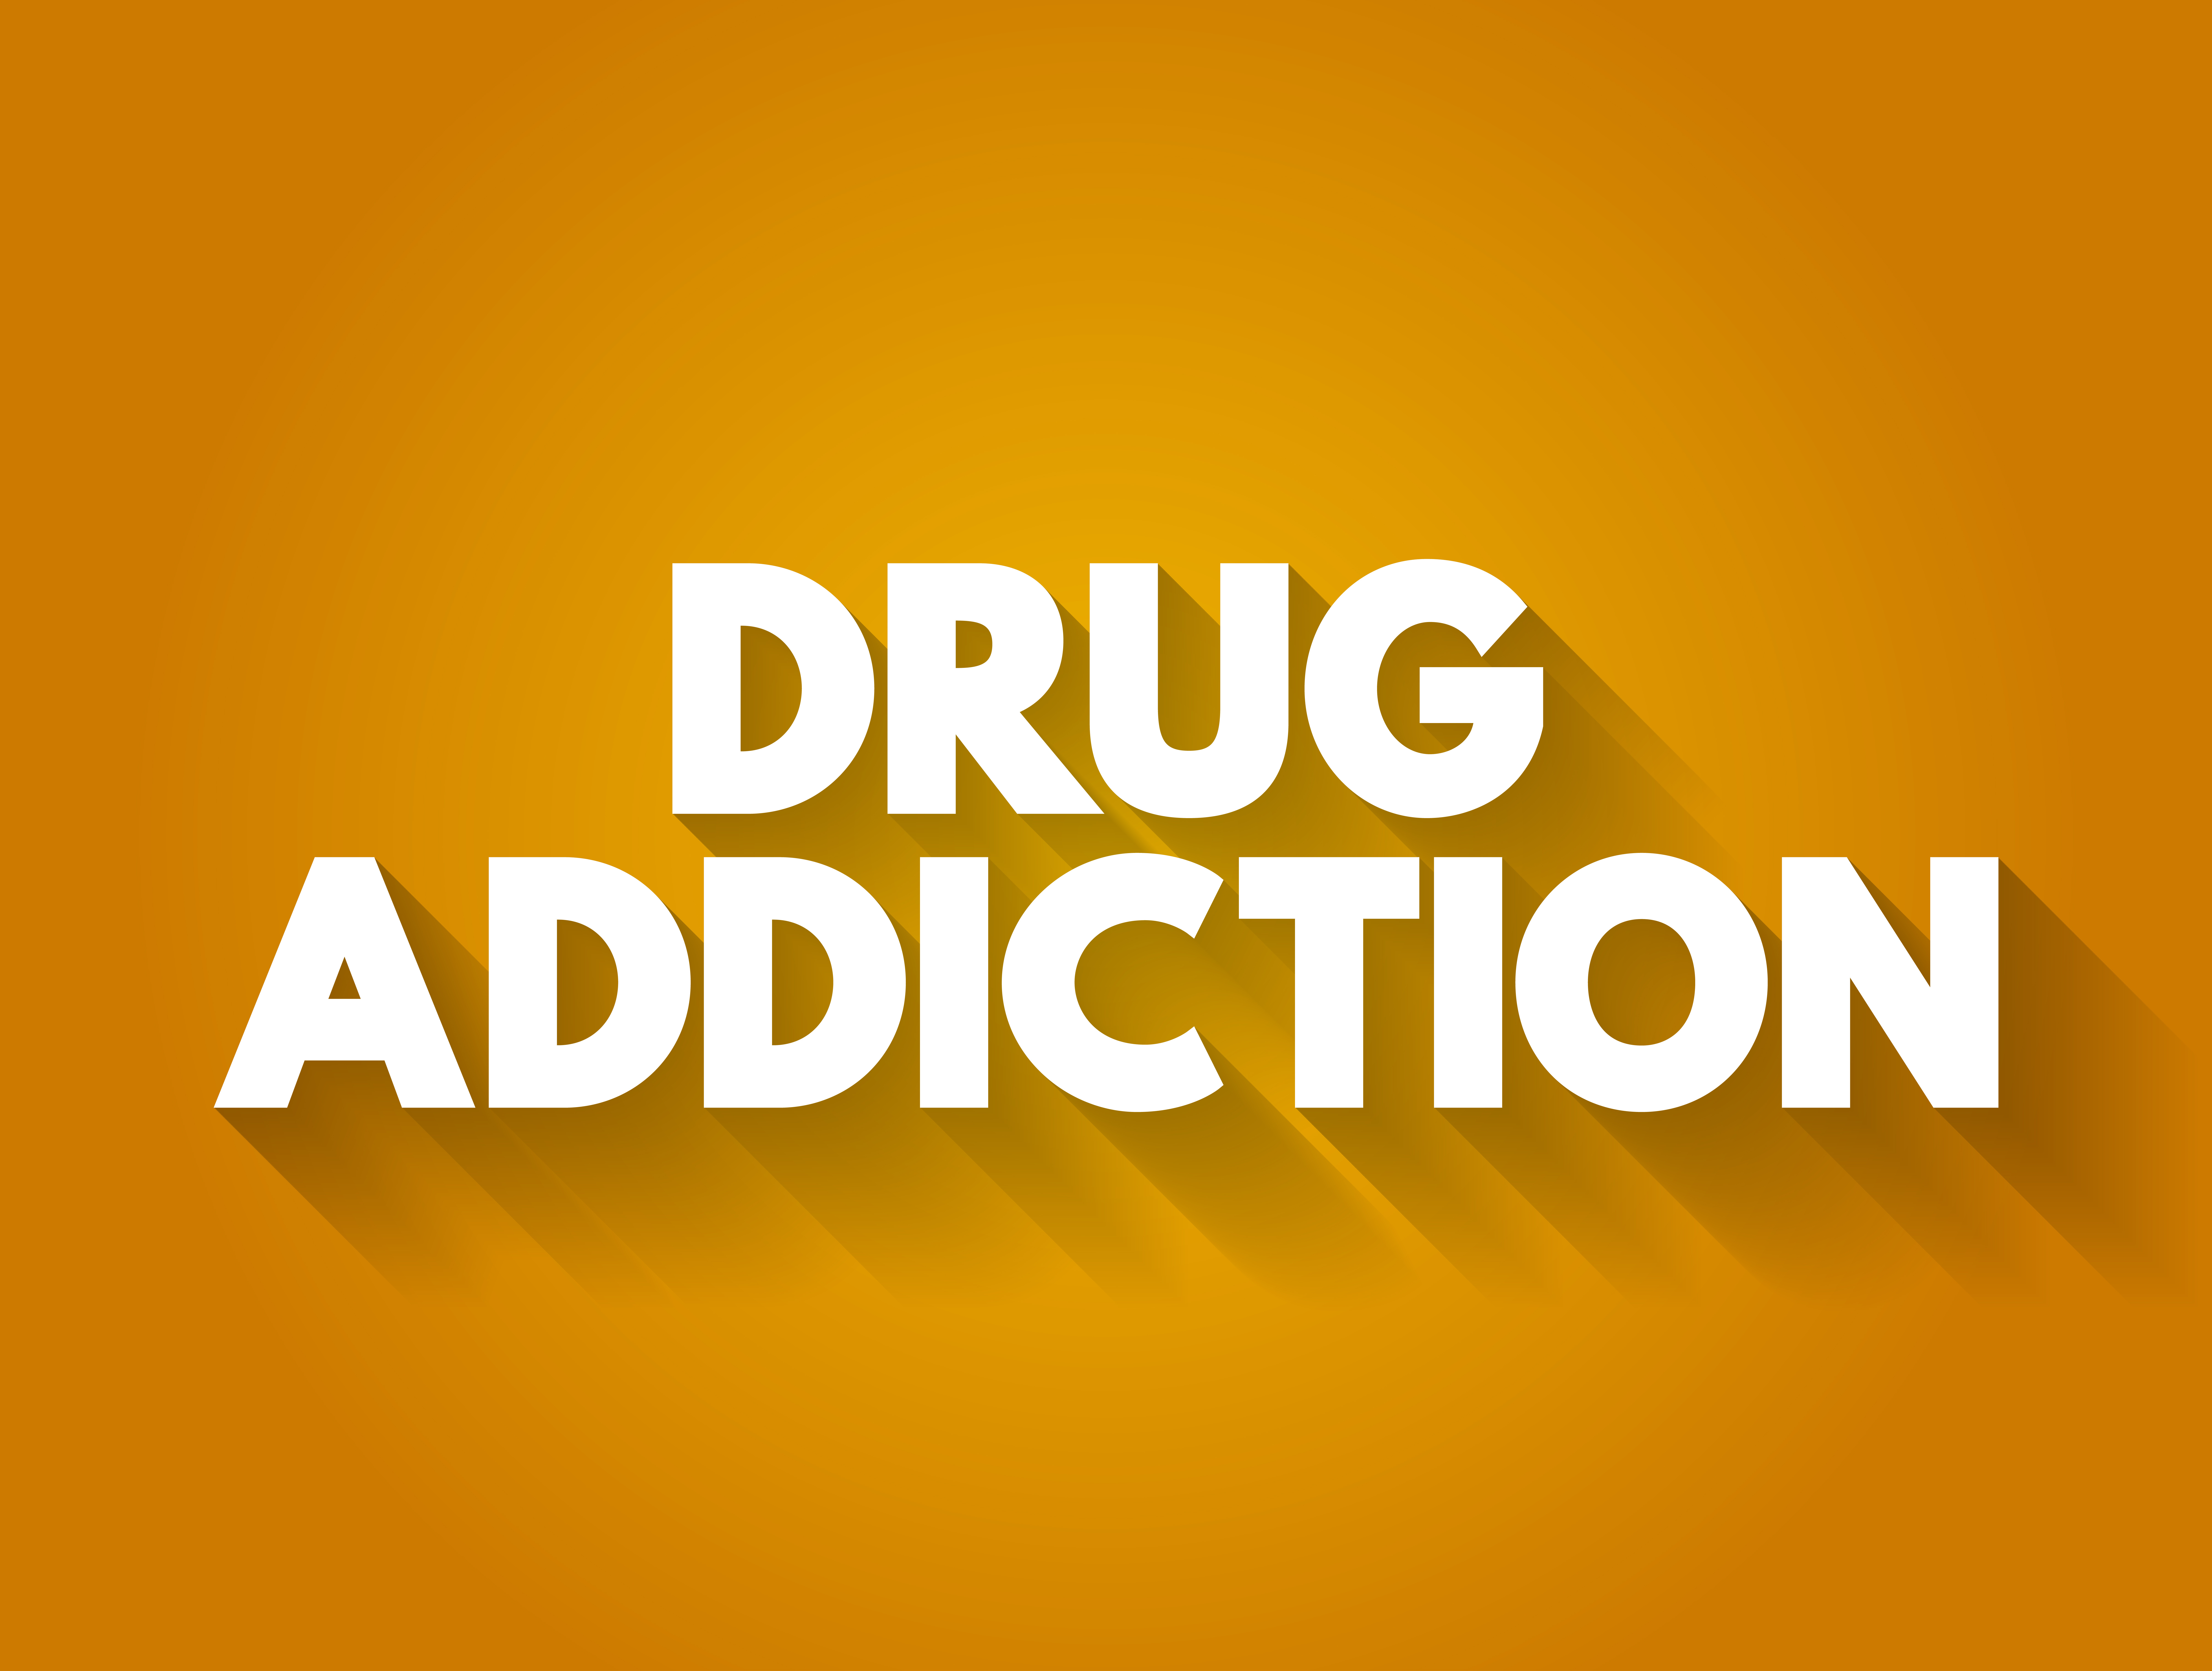 Drug addiction text quote, concept background